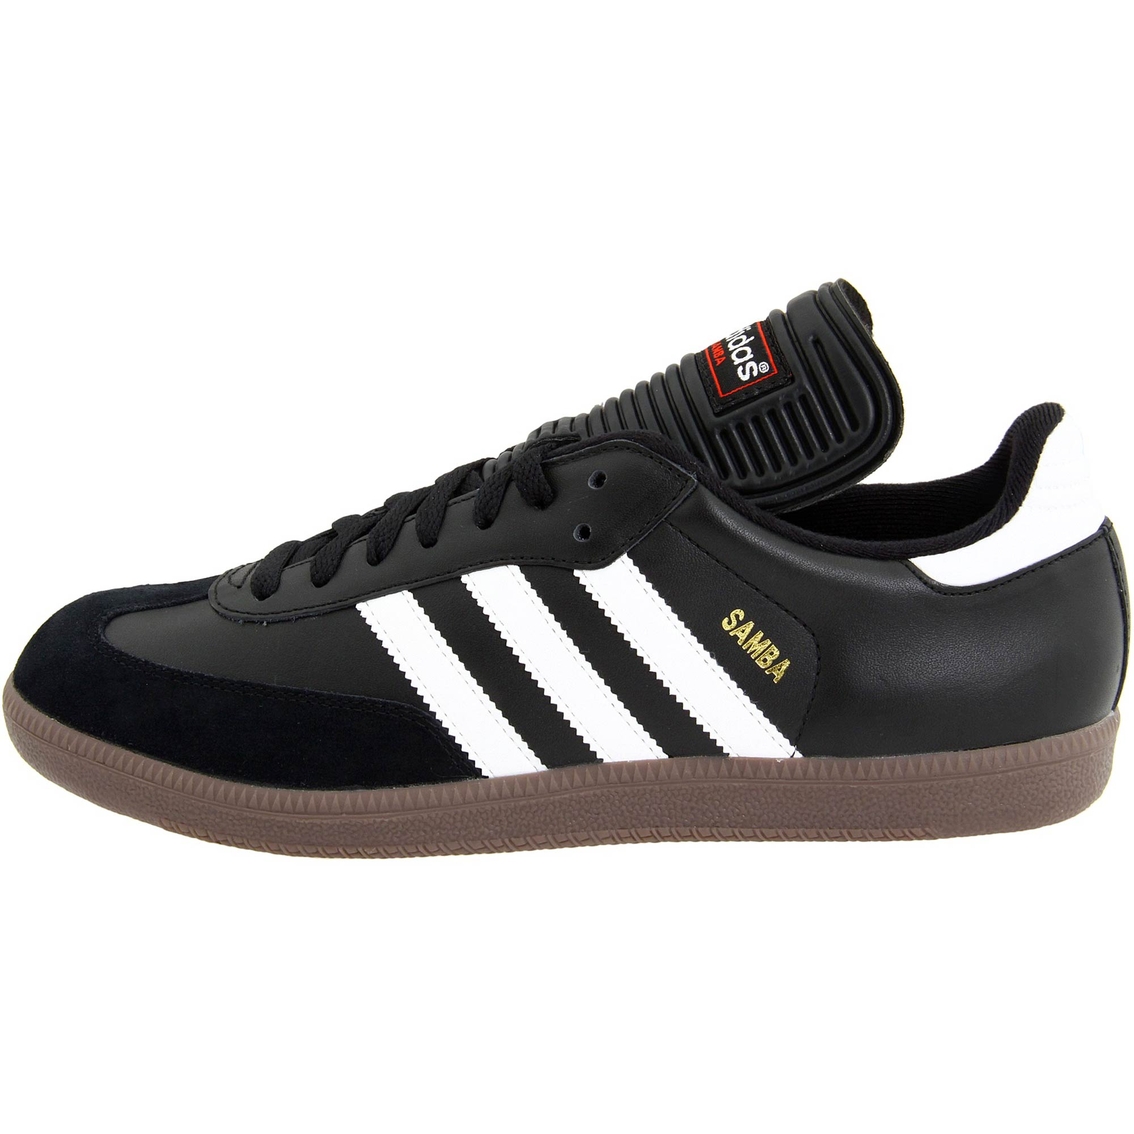 Adidas Men's Samba Classic Indoor Soccer Shoes | Soccer | Shoes | Shop ...